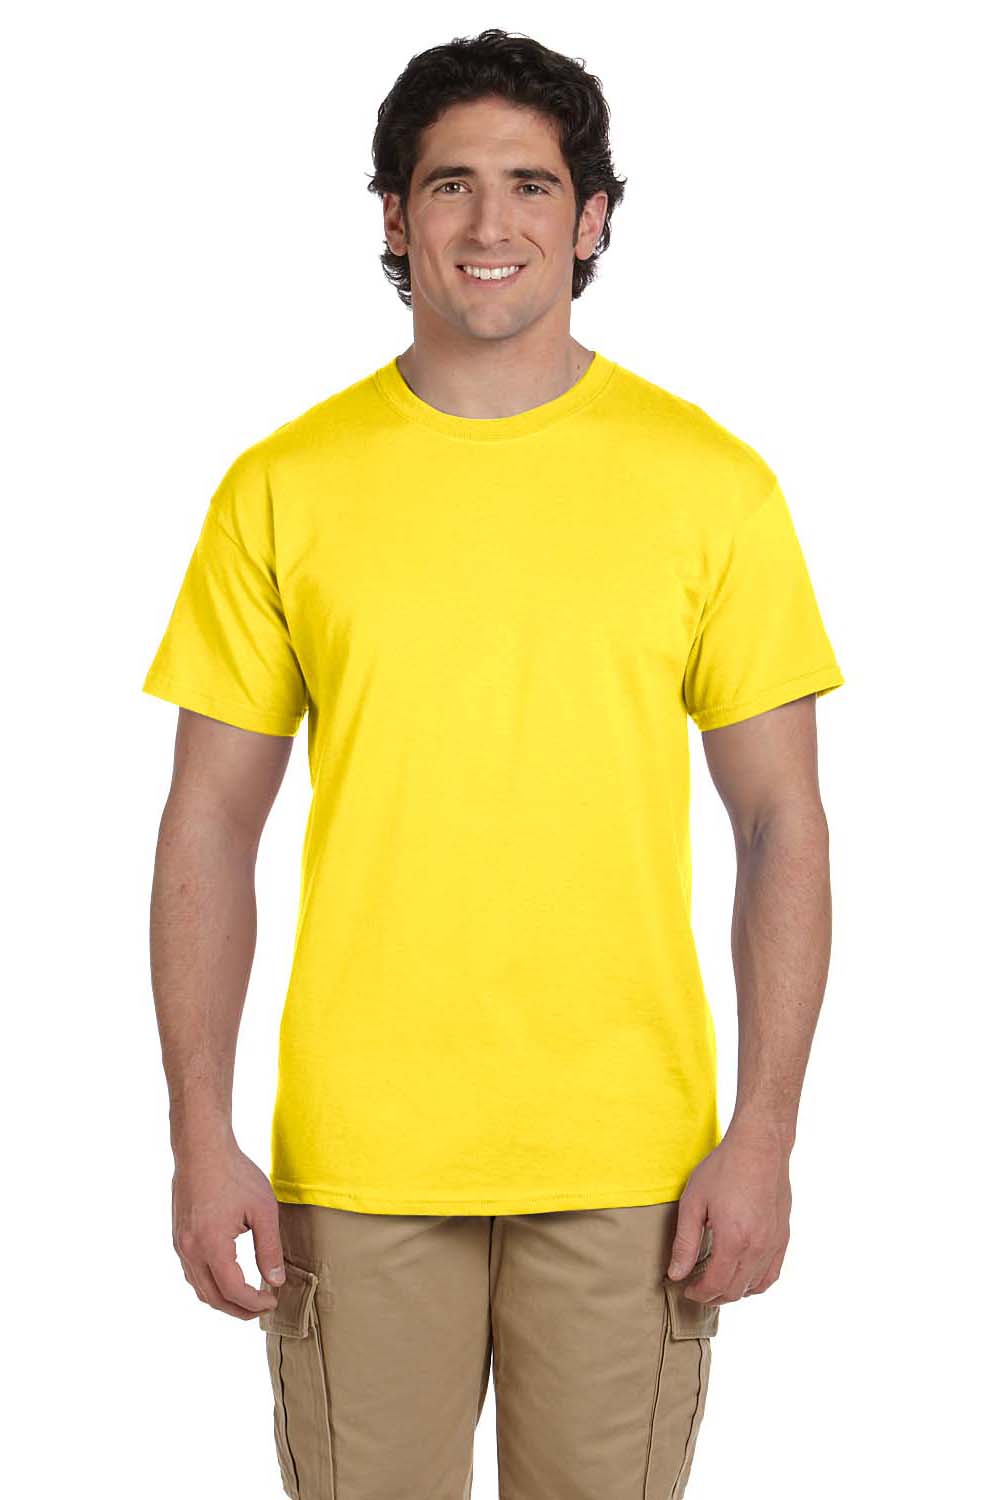 Hanes 5170 Mens EcoSmart Short Sleeve Crewneck T-Shirt Yellow Front